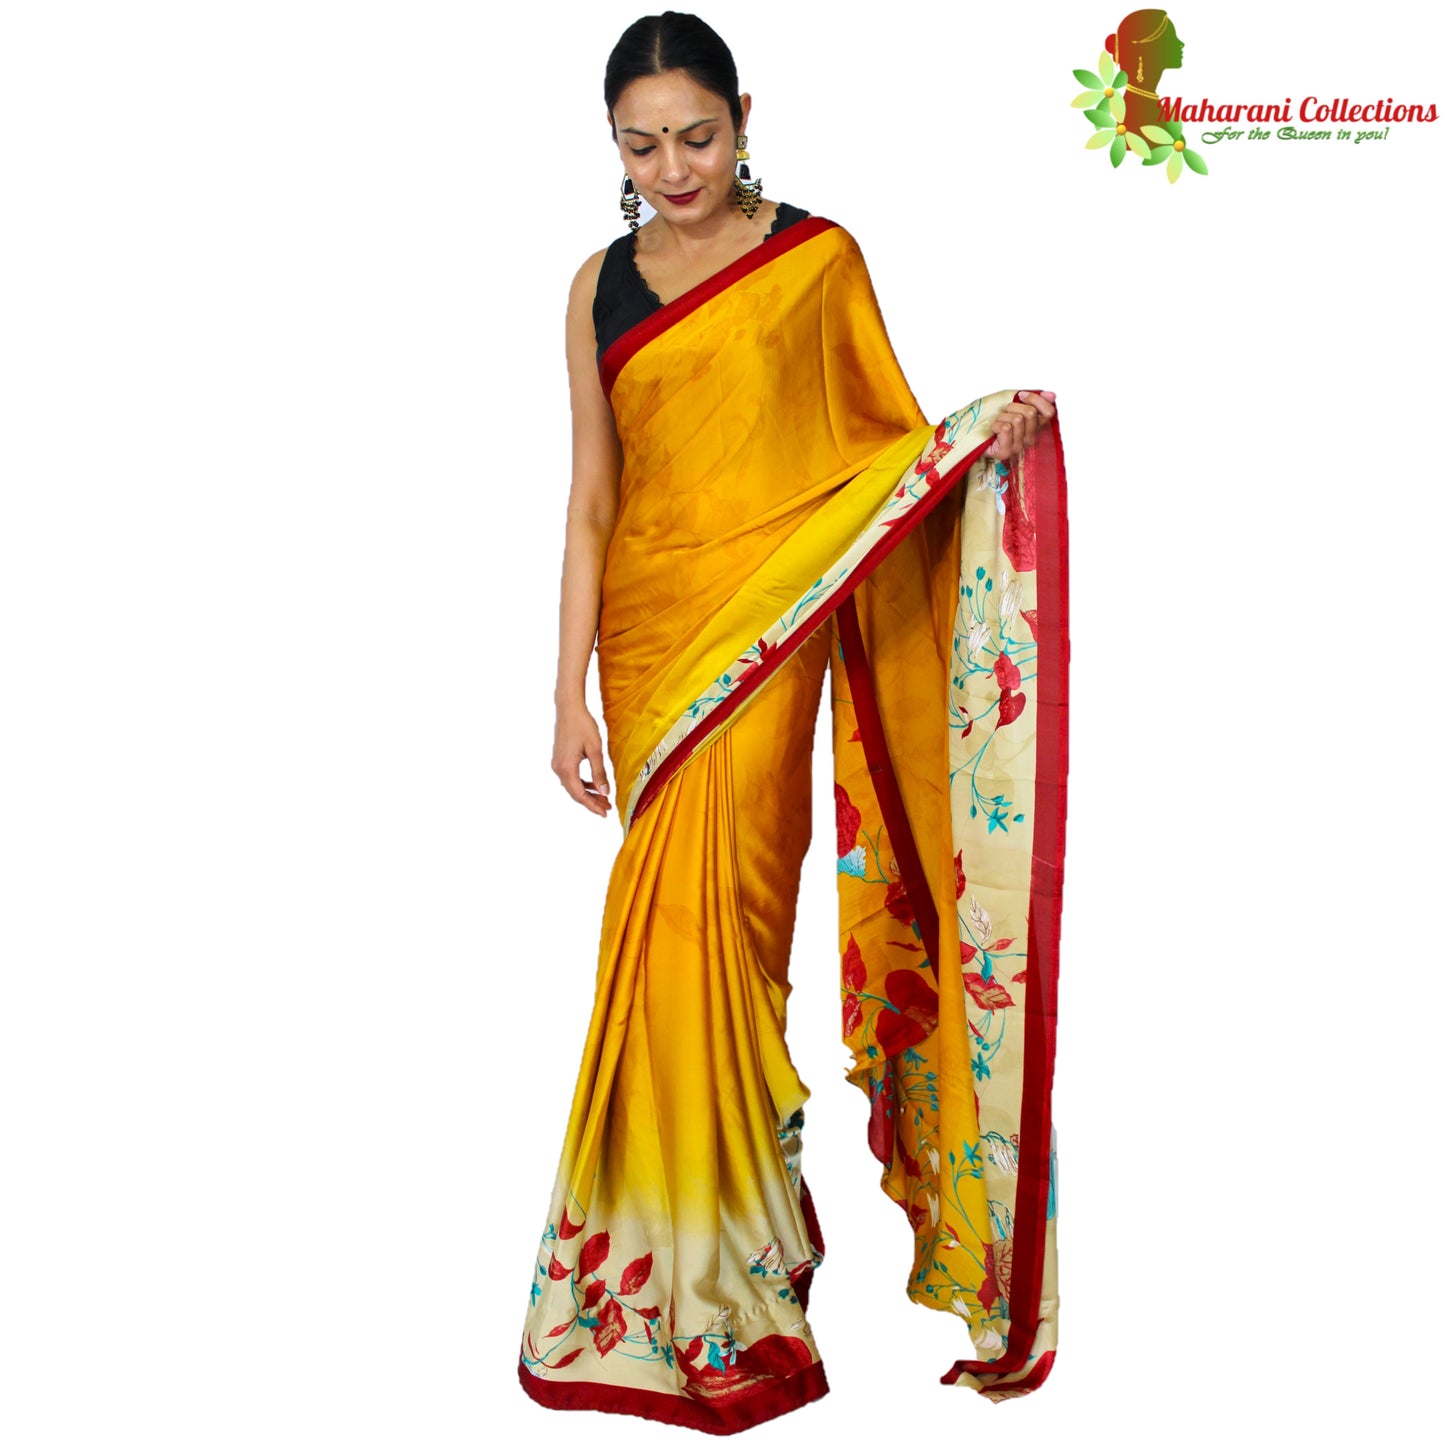 Maharani's Simple Elegance Satin Silk Saree - Yellow and Red